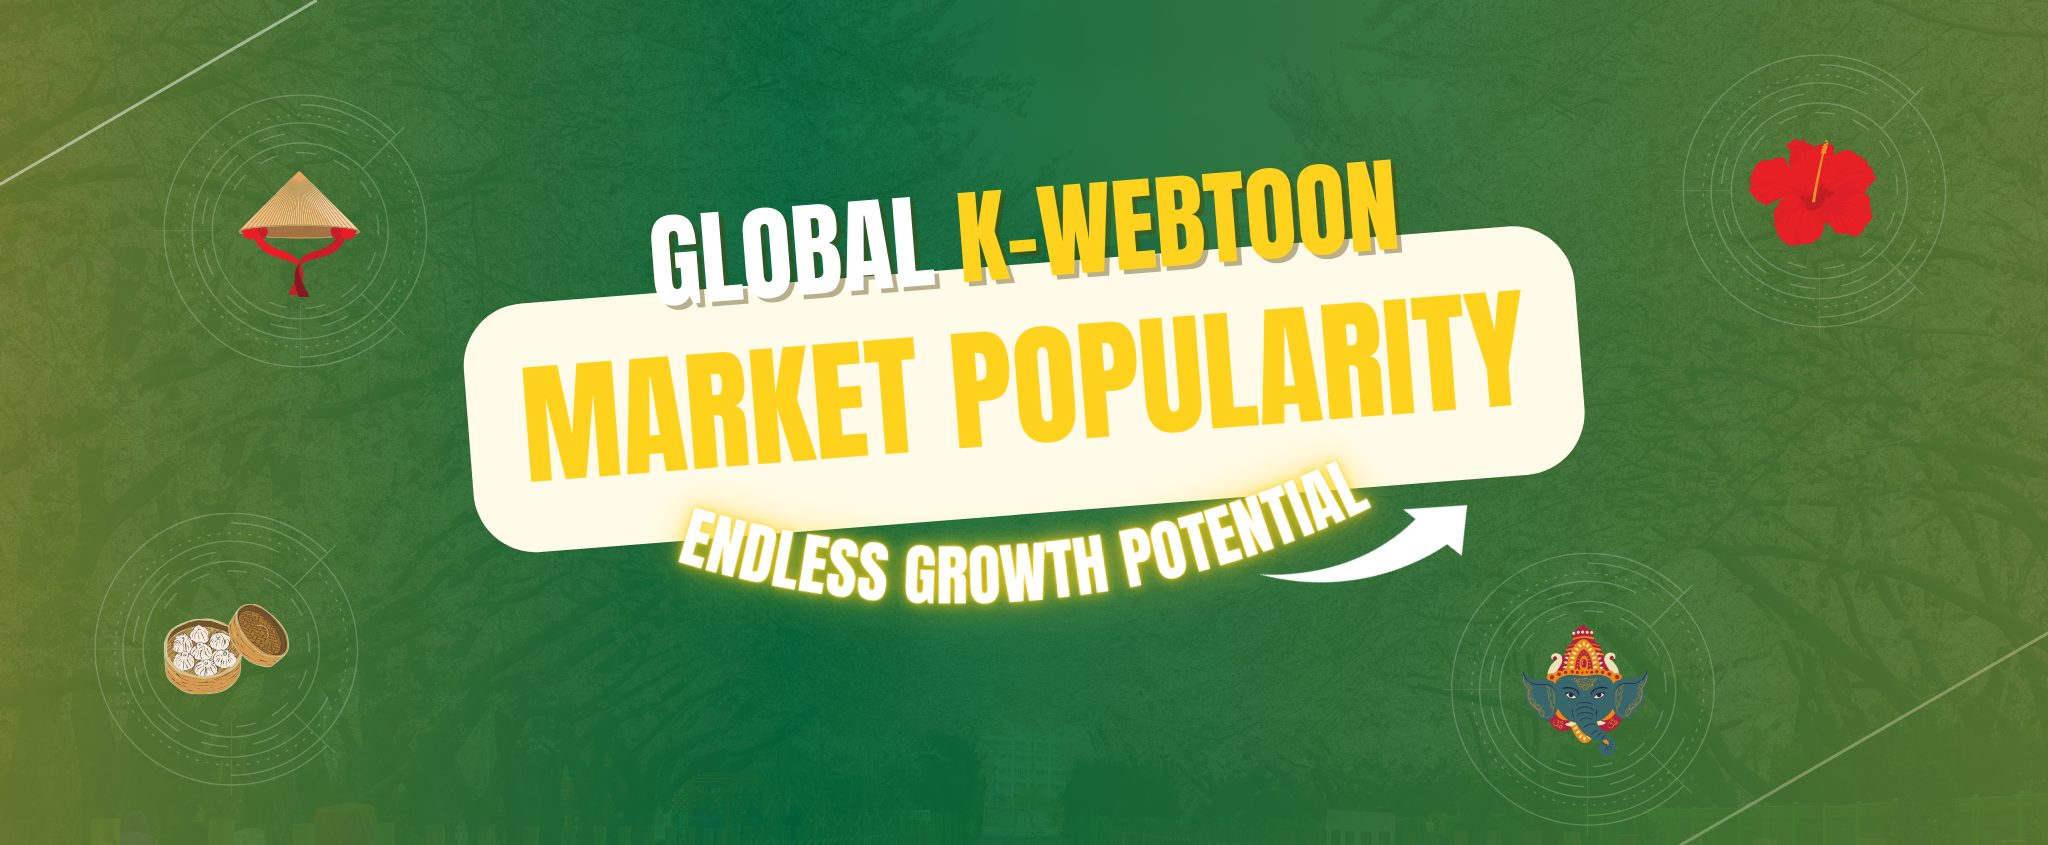 Global K-webtoon Market Popularity - Endless Growth Potential